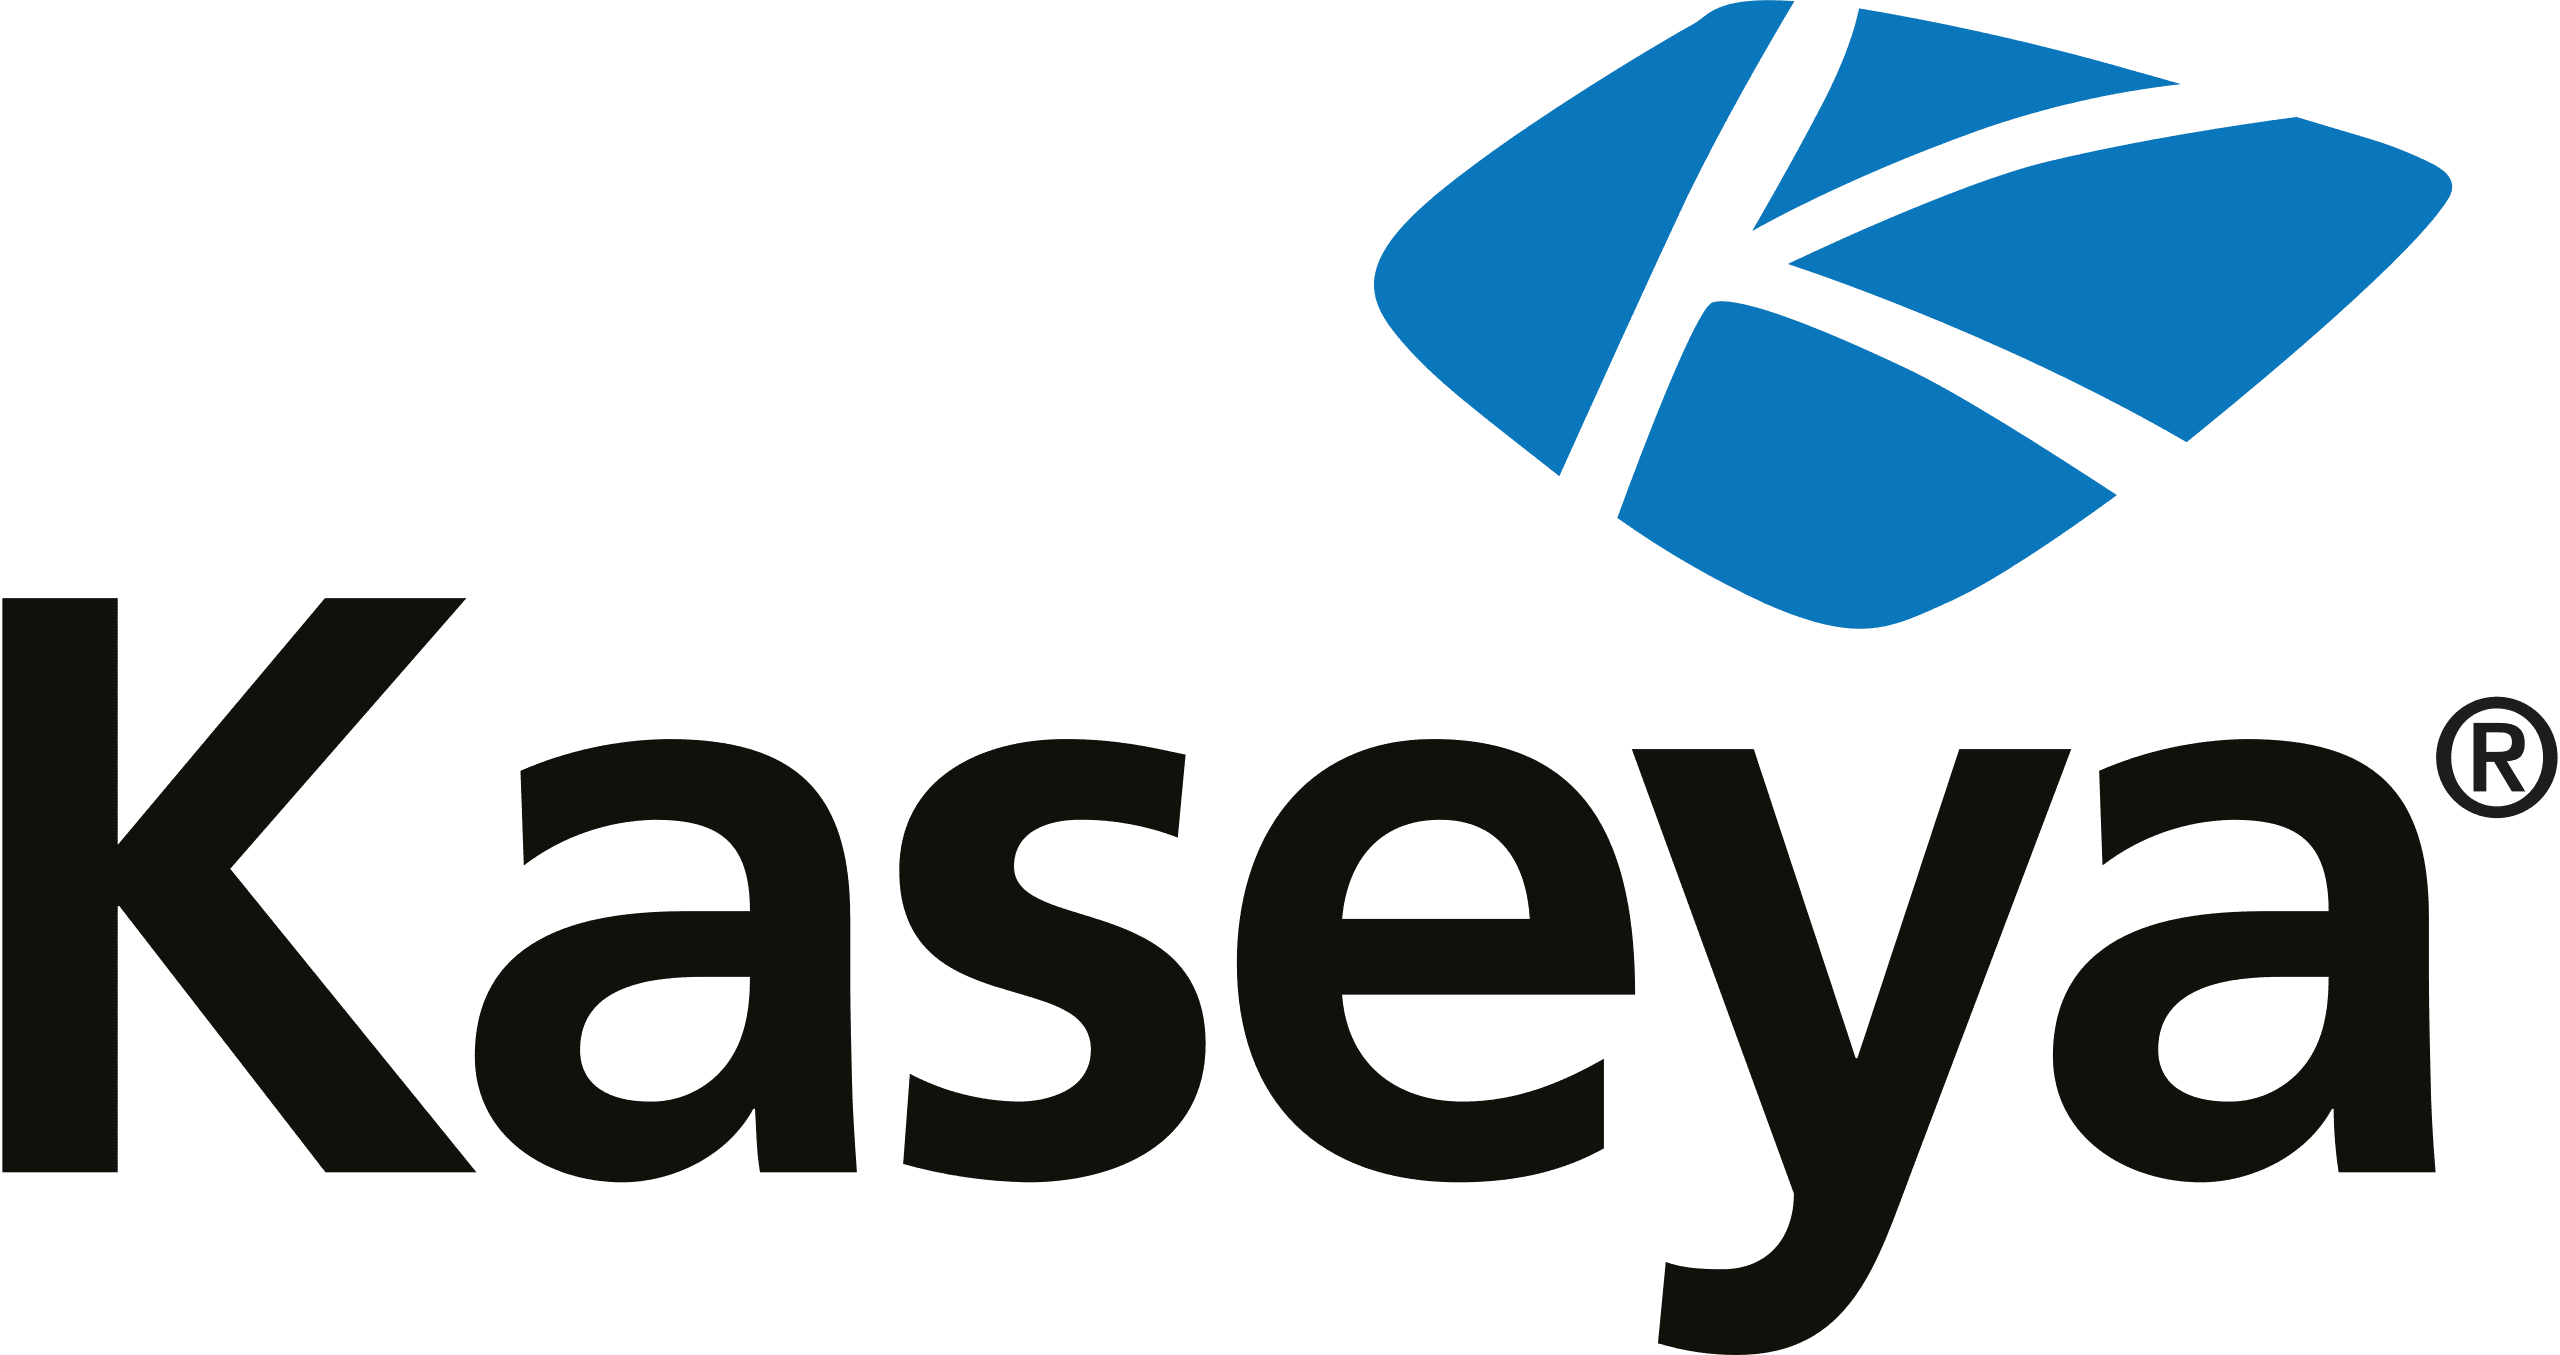 kasey logo